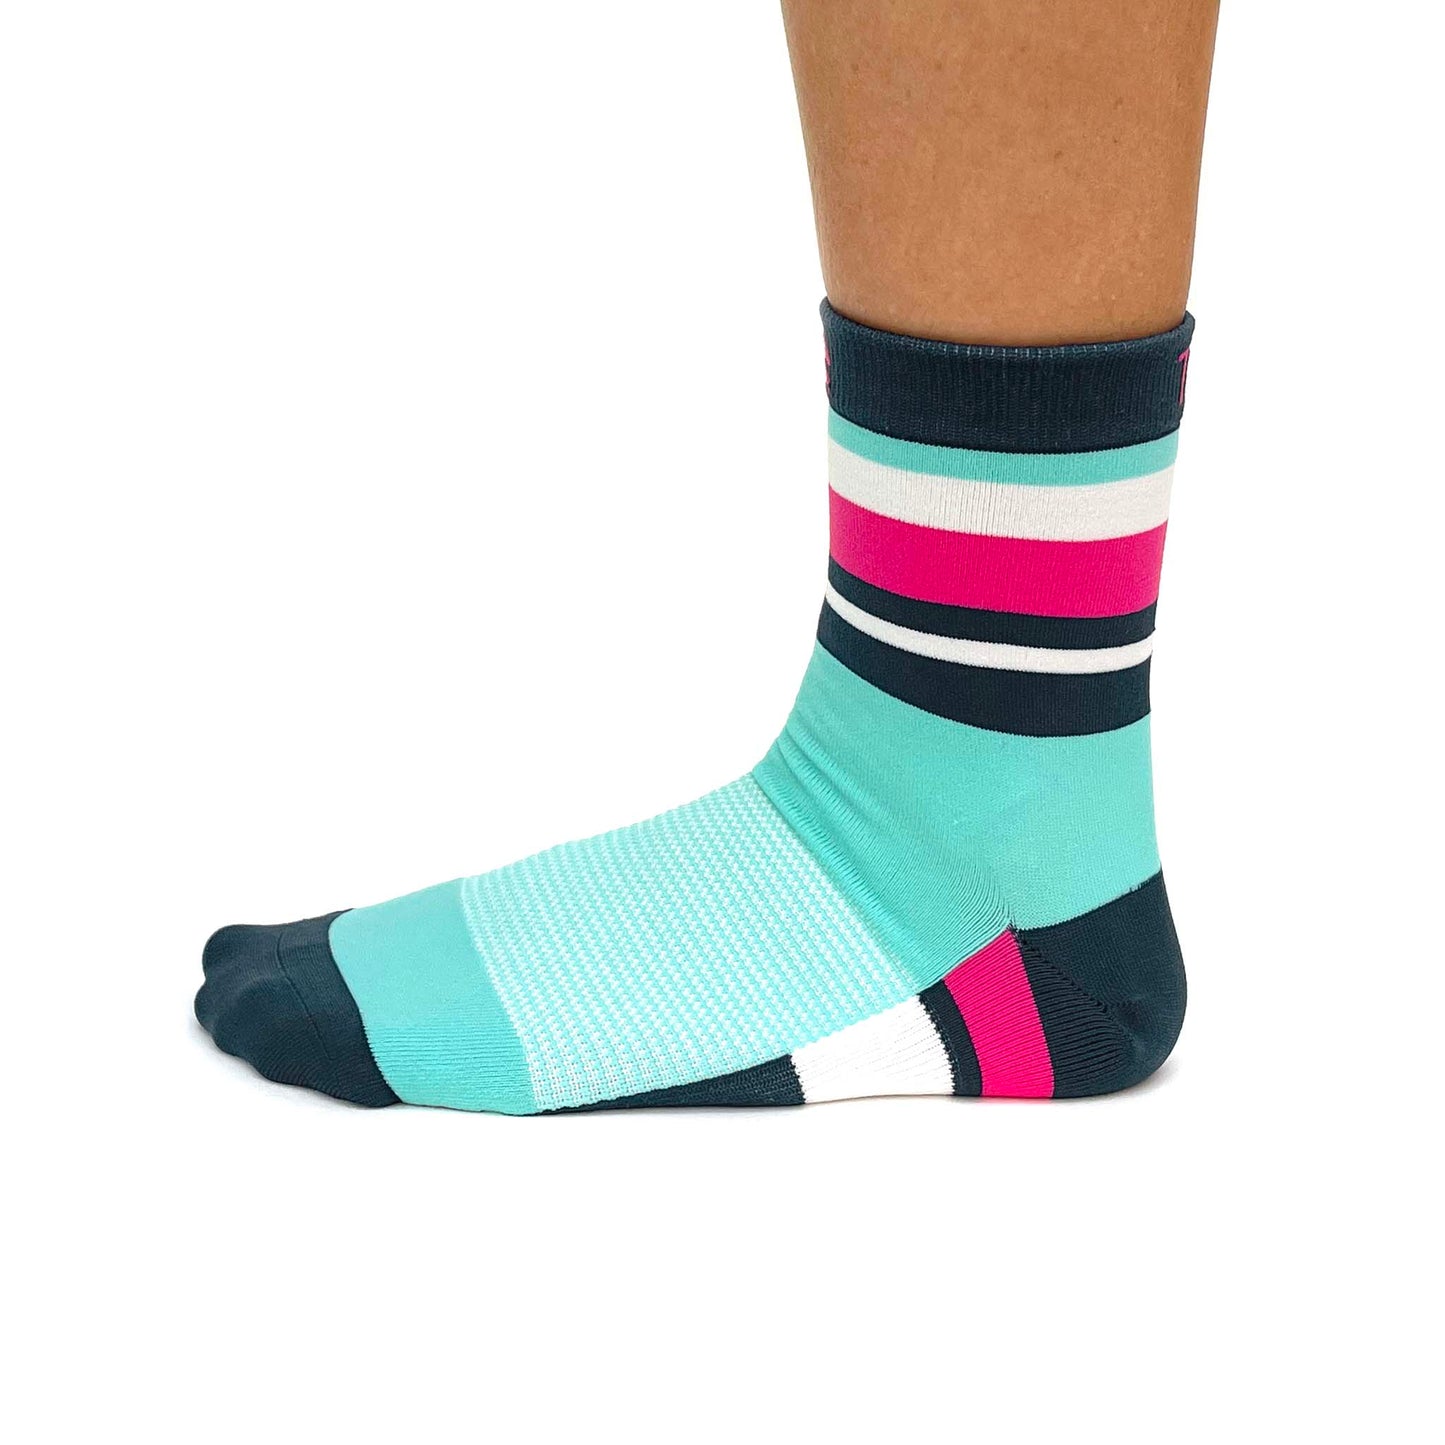 Mix Match Socks